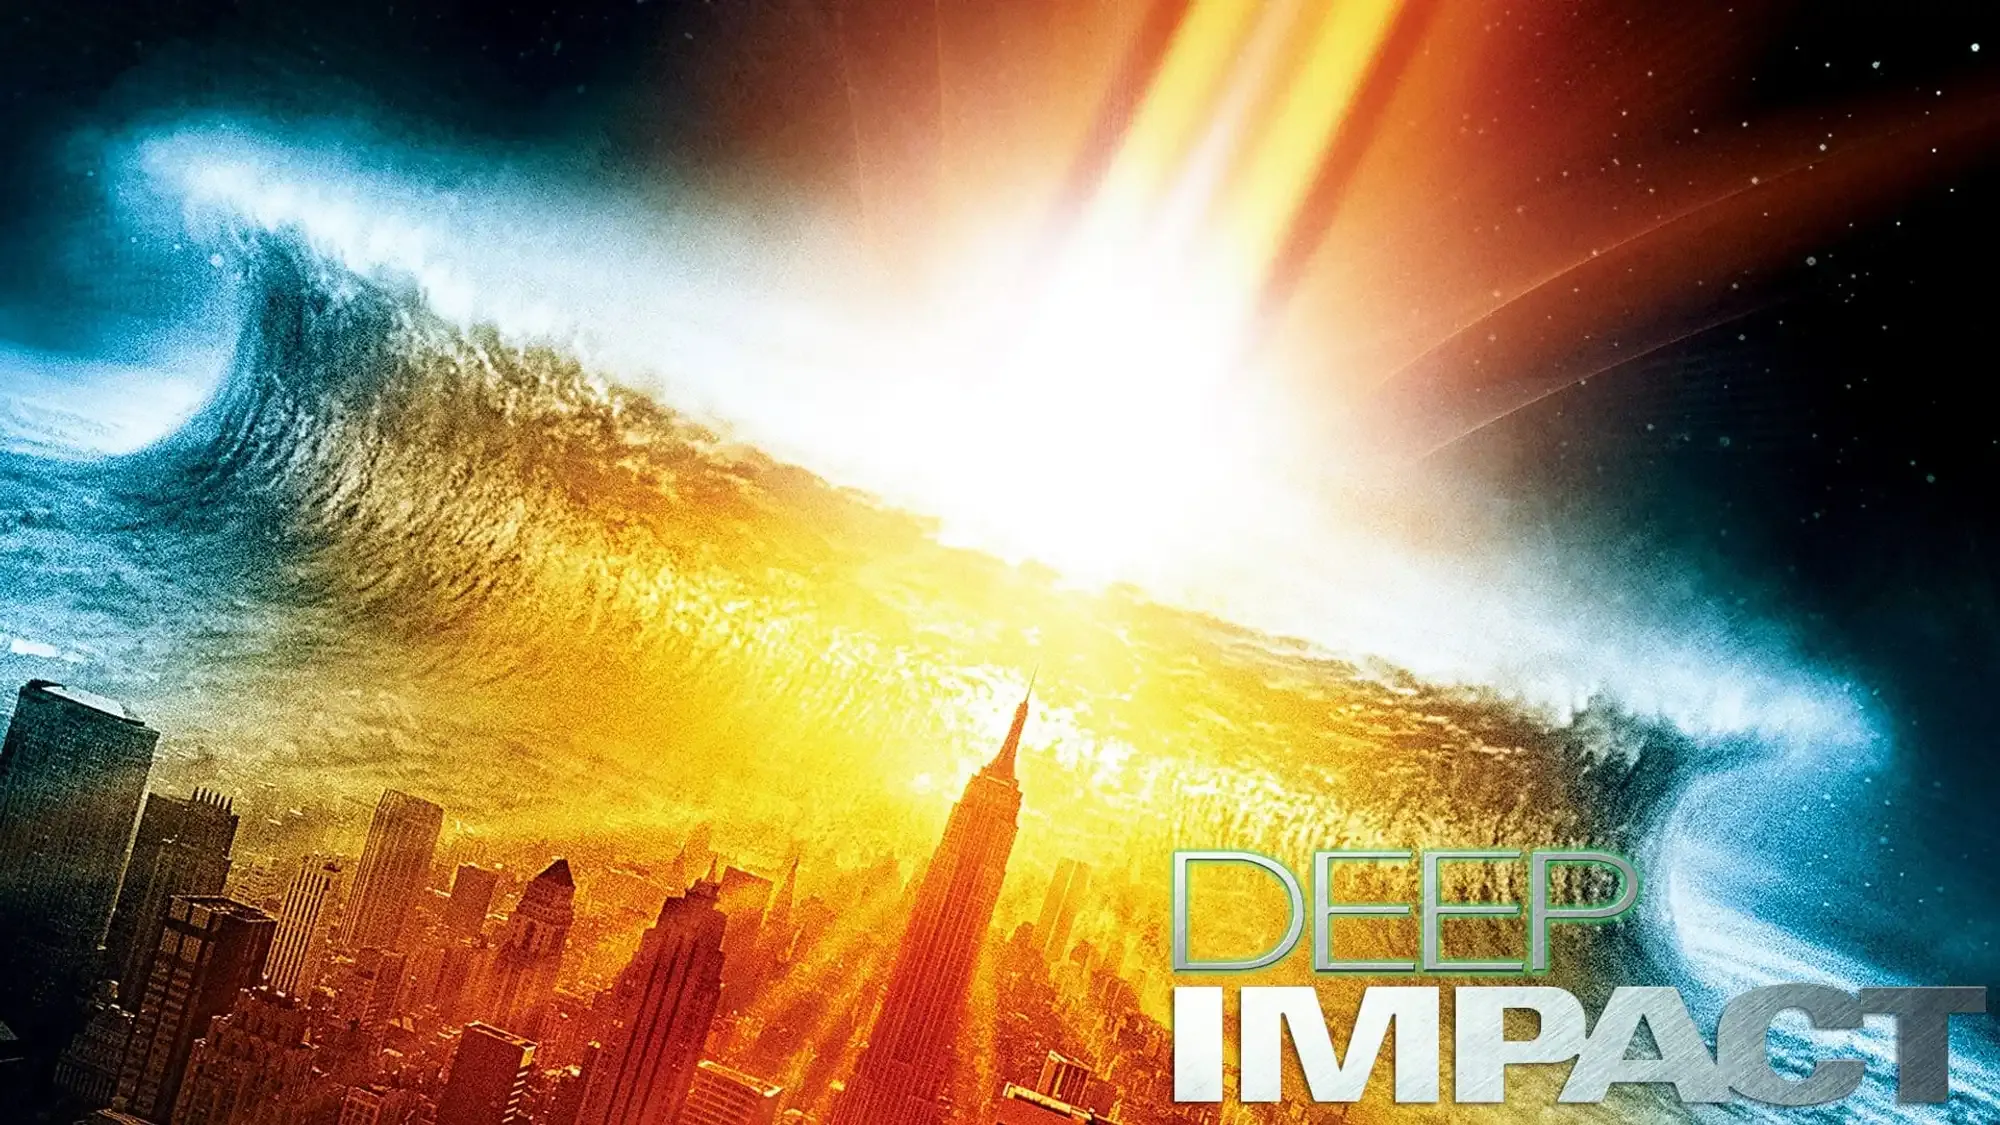 Deep Impact movie review